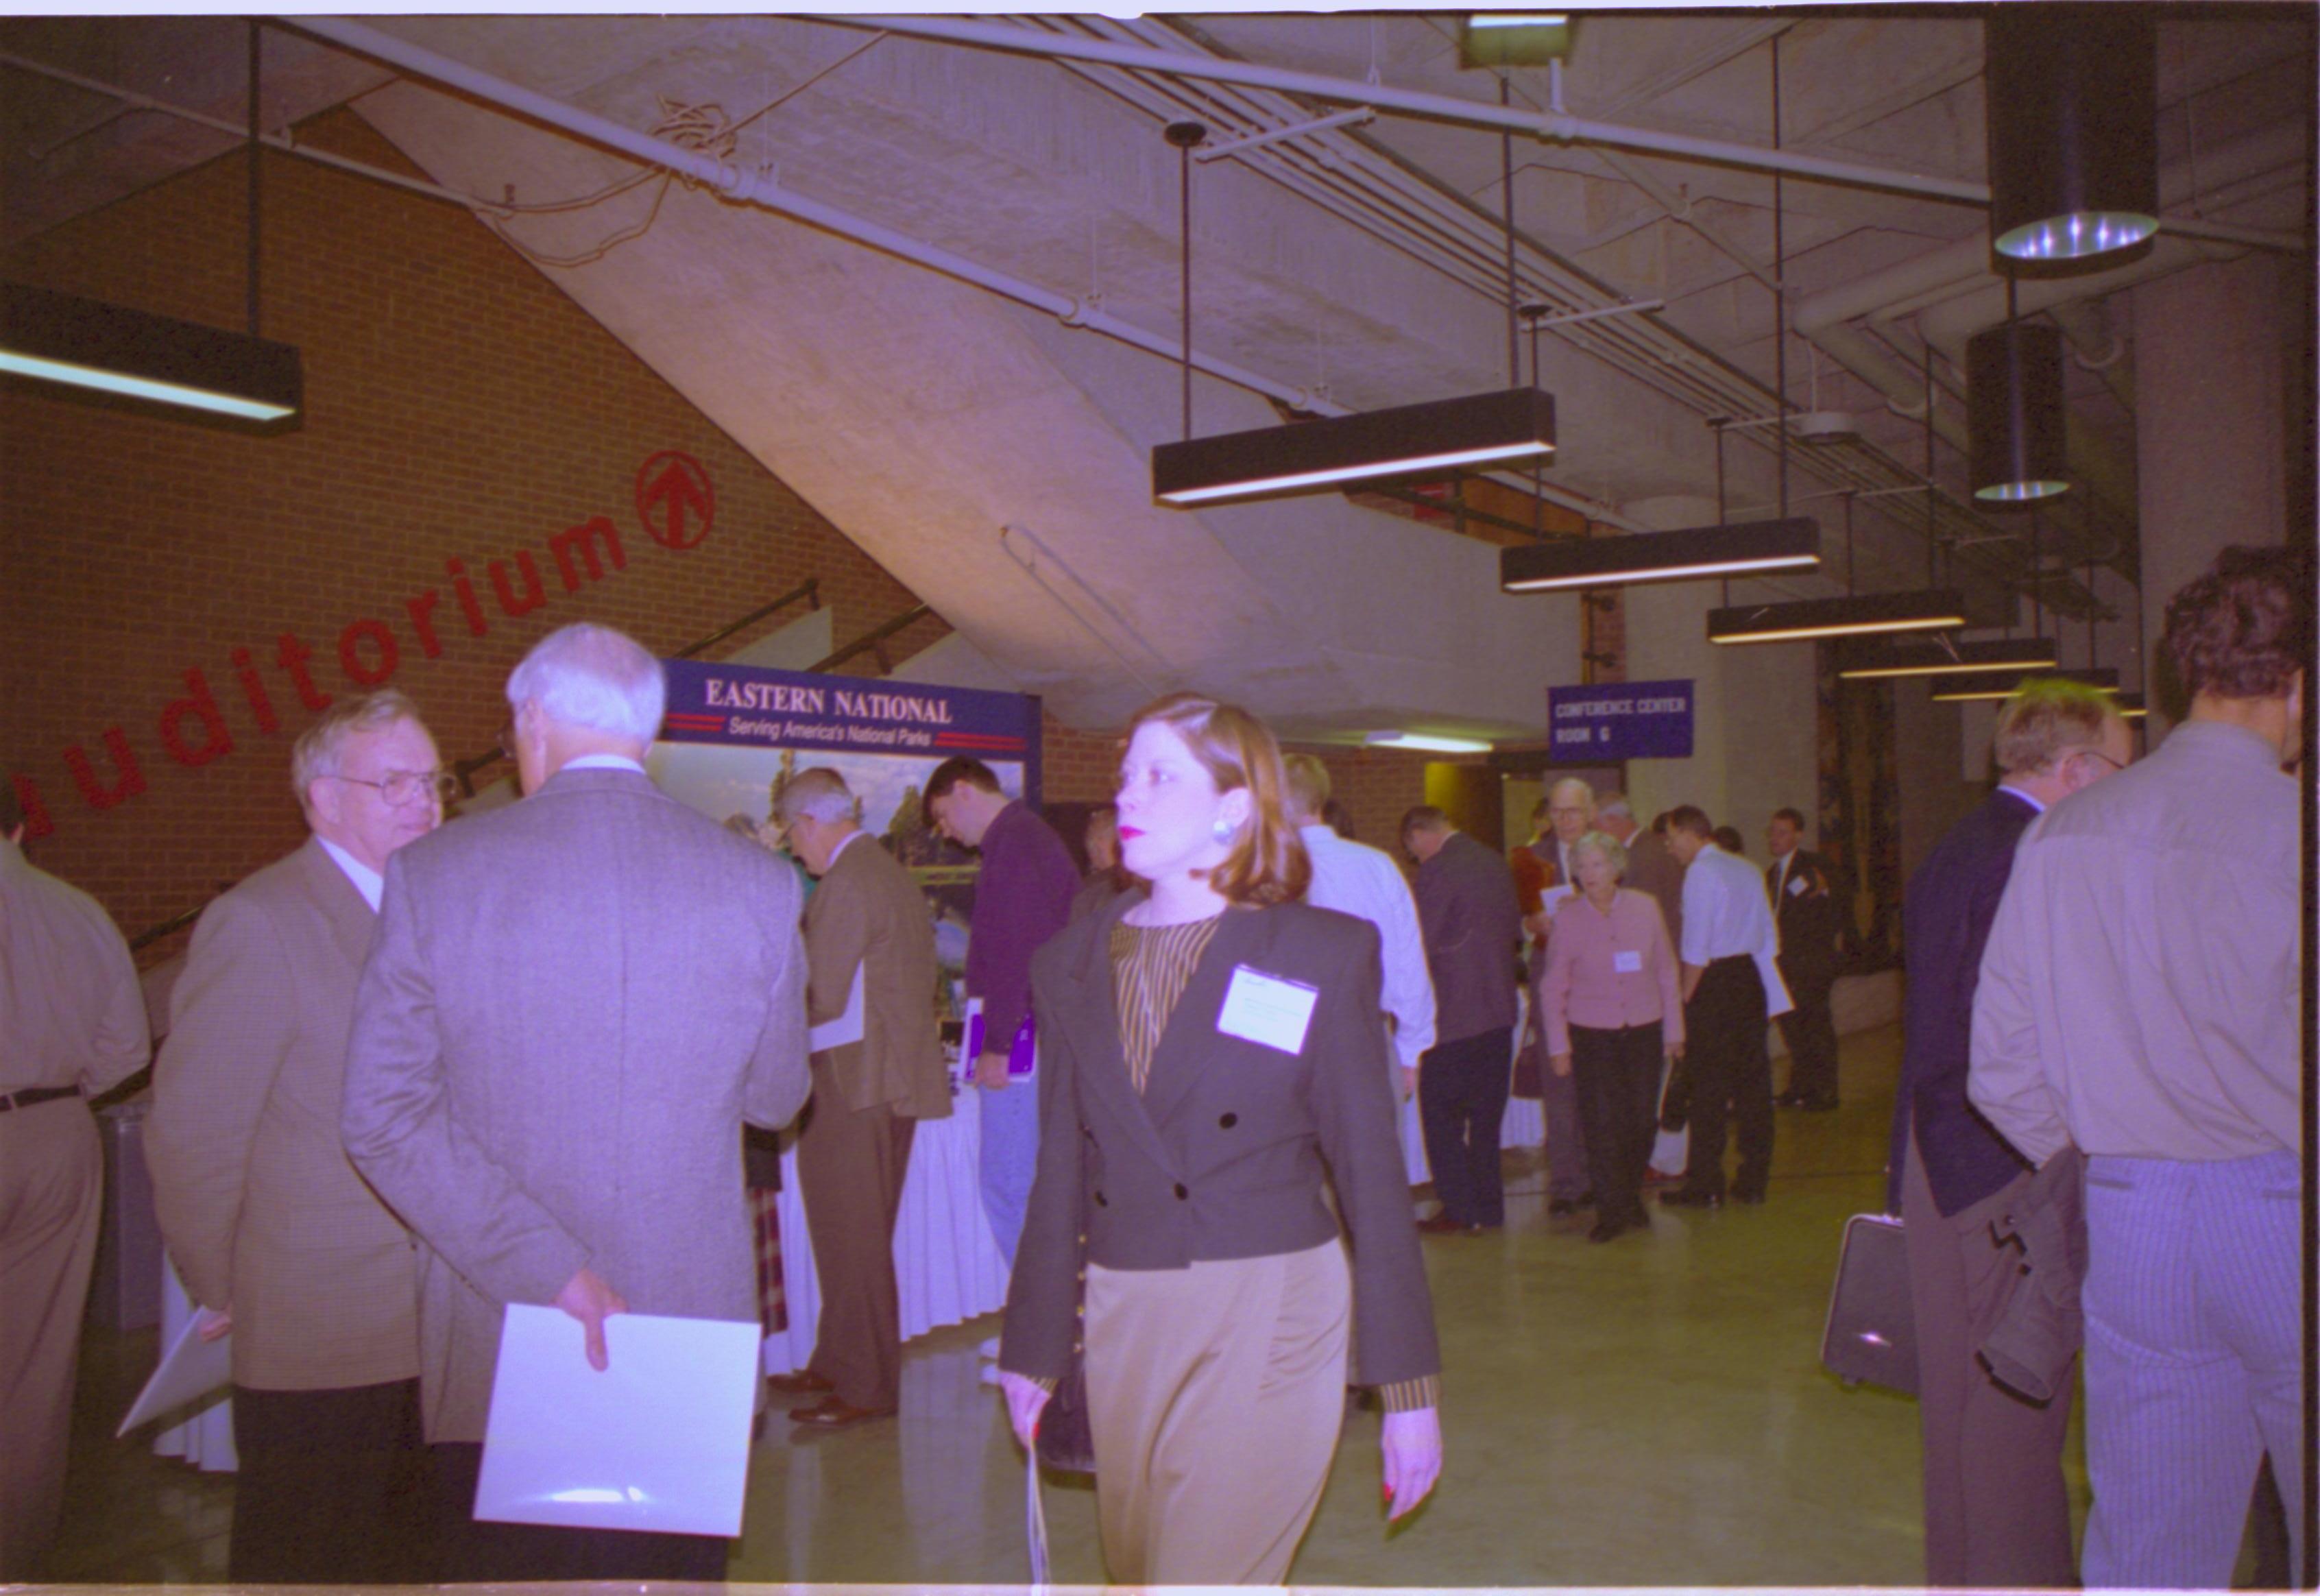 Lady walking in exhibit hall 3-1997 Colloq (color); 20 Colloquium, 1997